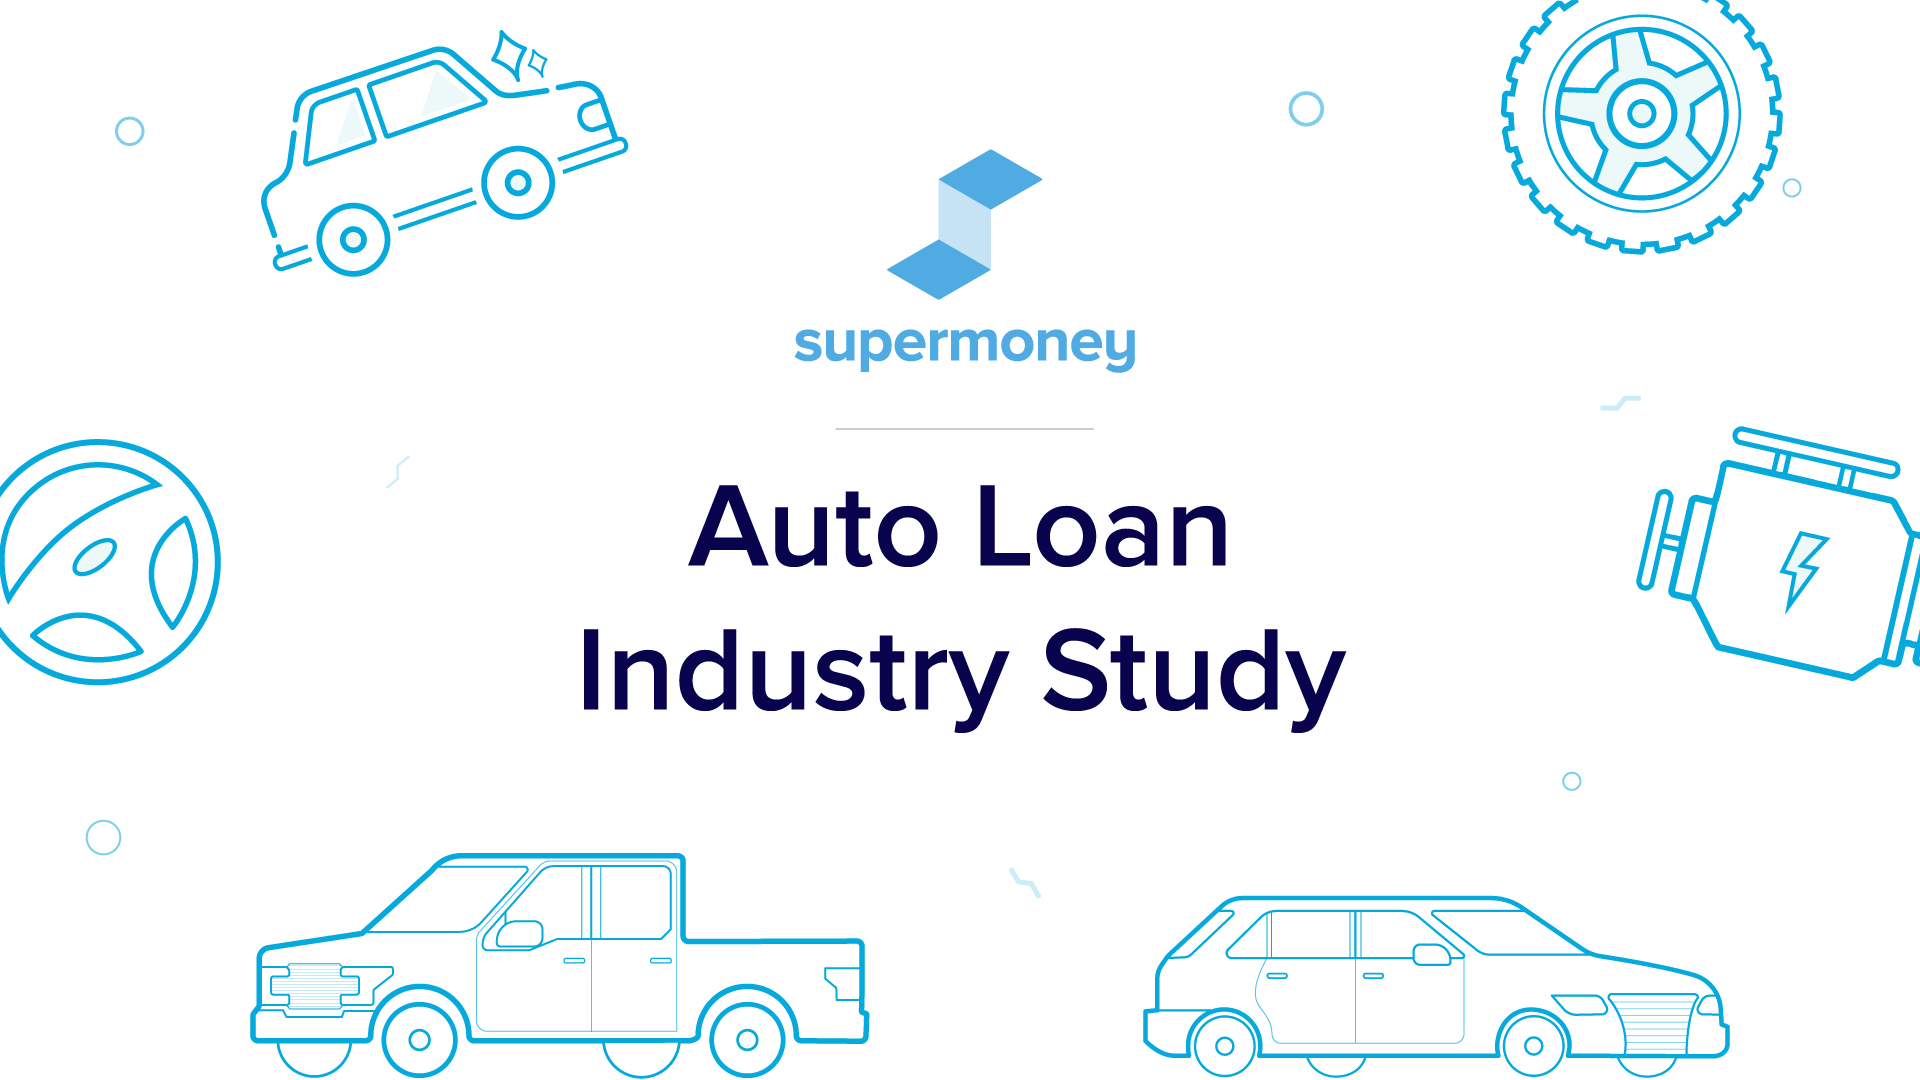 Auto loan industry study